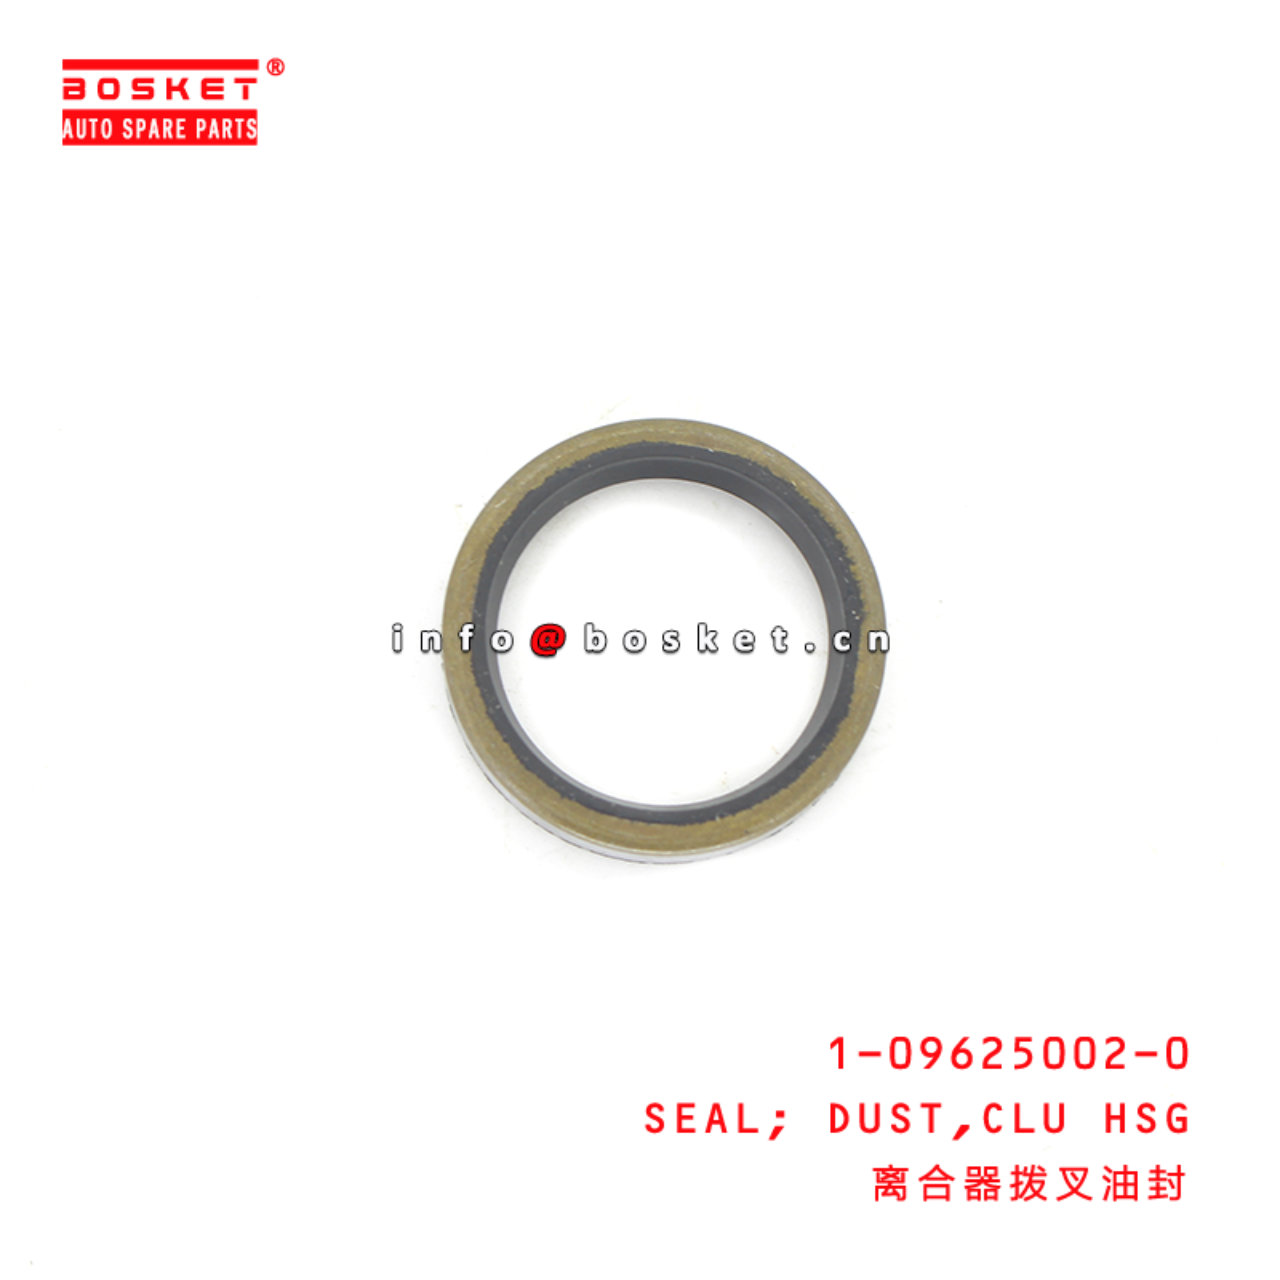 1-09625002-0 Clutch Housing Dust Seal Suitable for ISUZU ELF 4HK1 1096250020